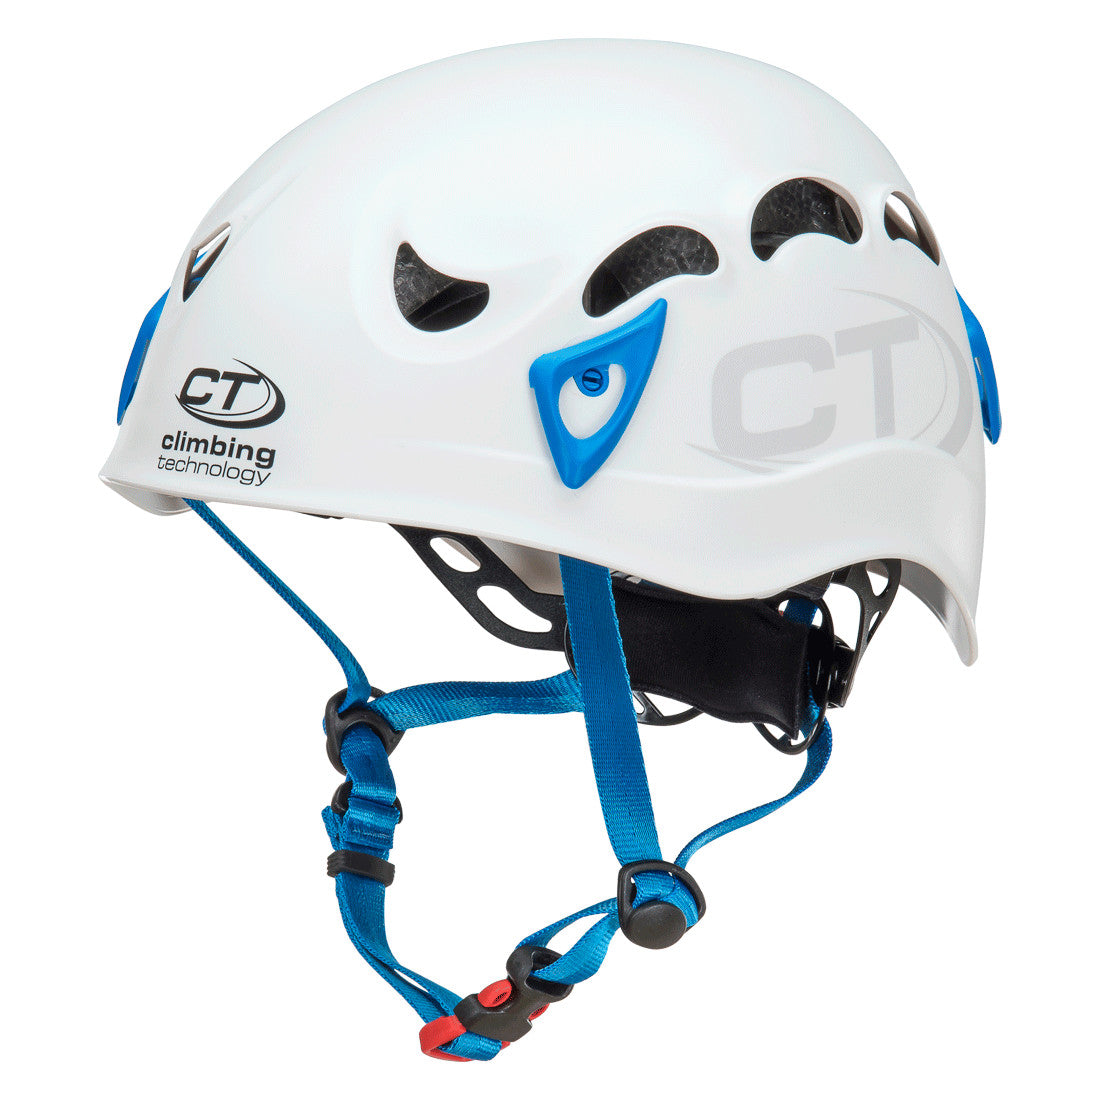 Climbing Technology Galaxy climbing helmet, in white colour